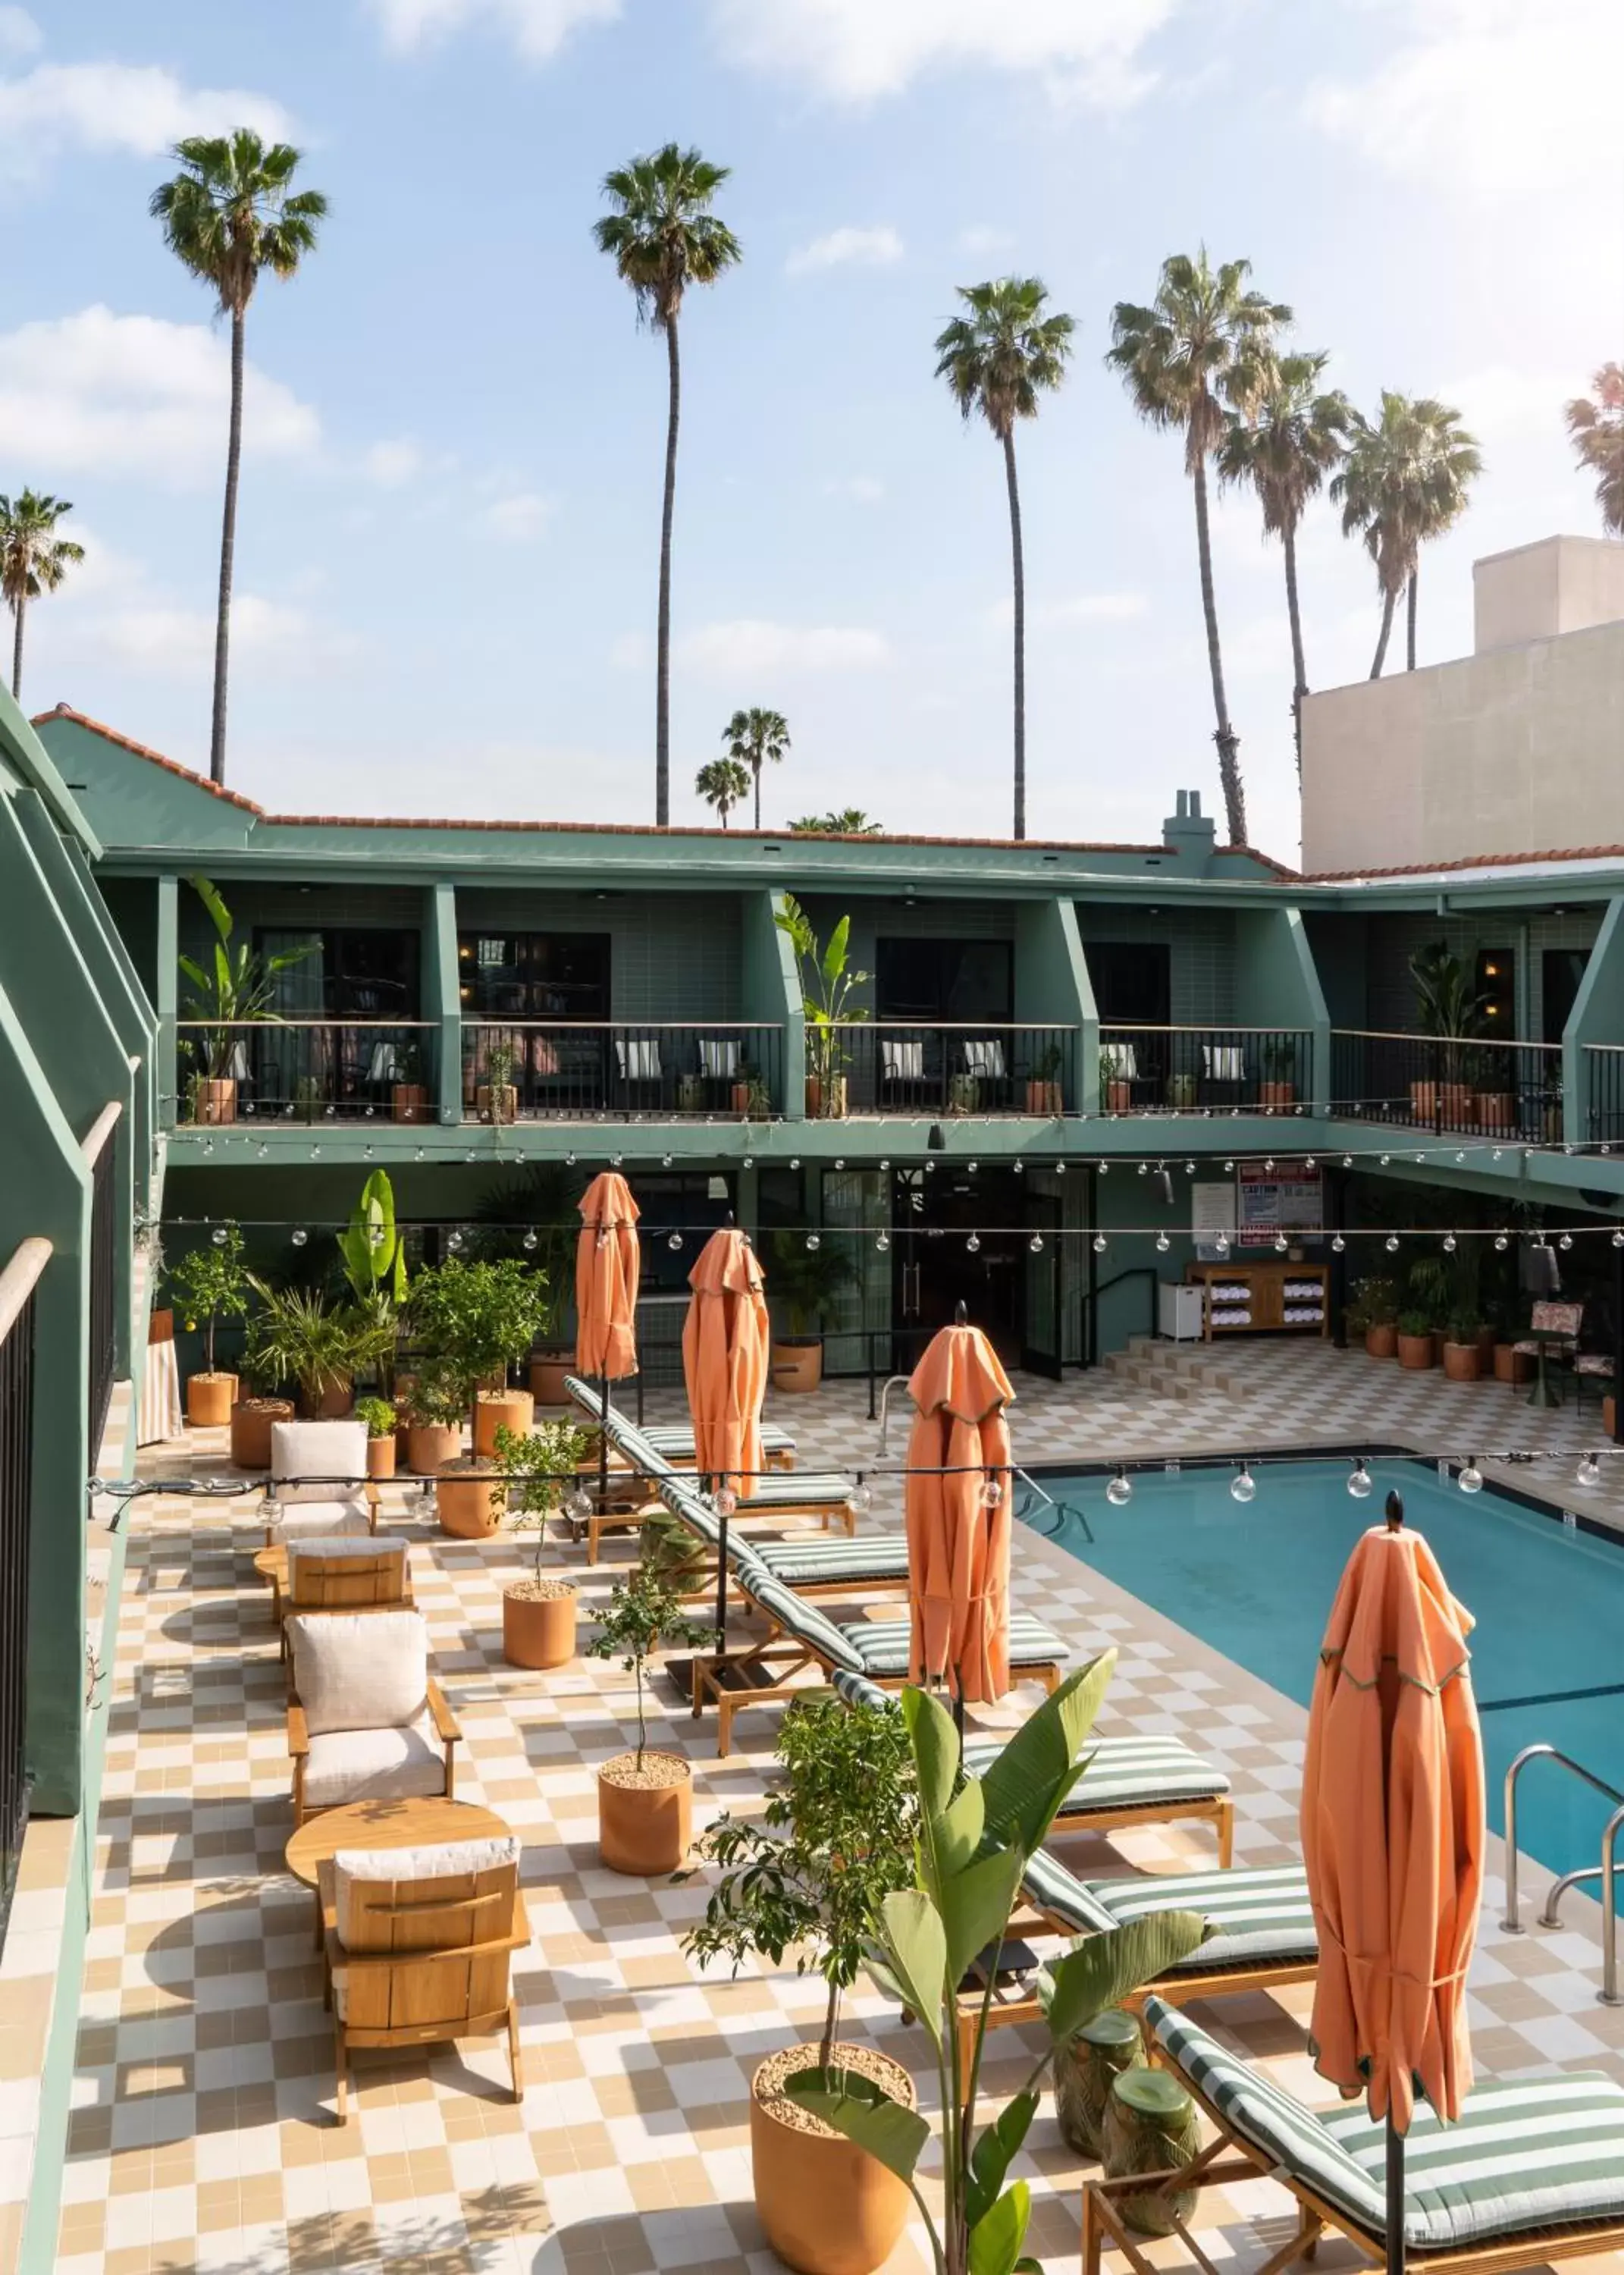 Swimming pool in Palihotel Hollywood